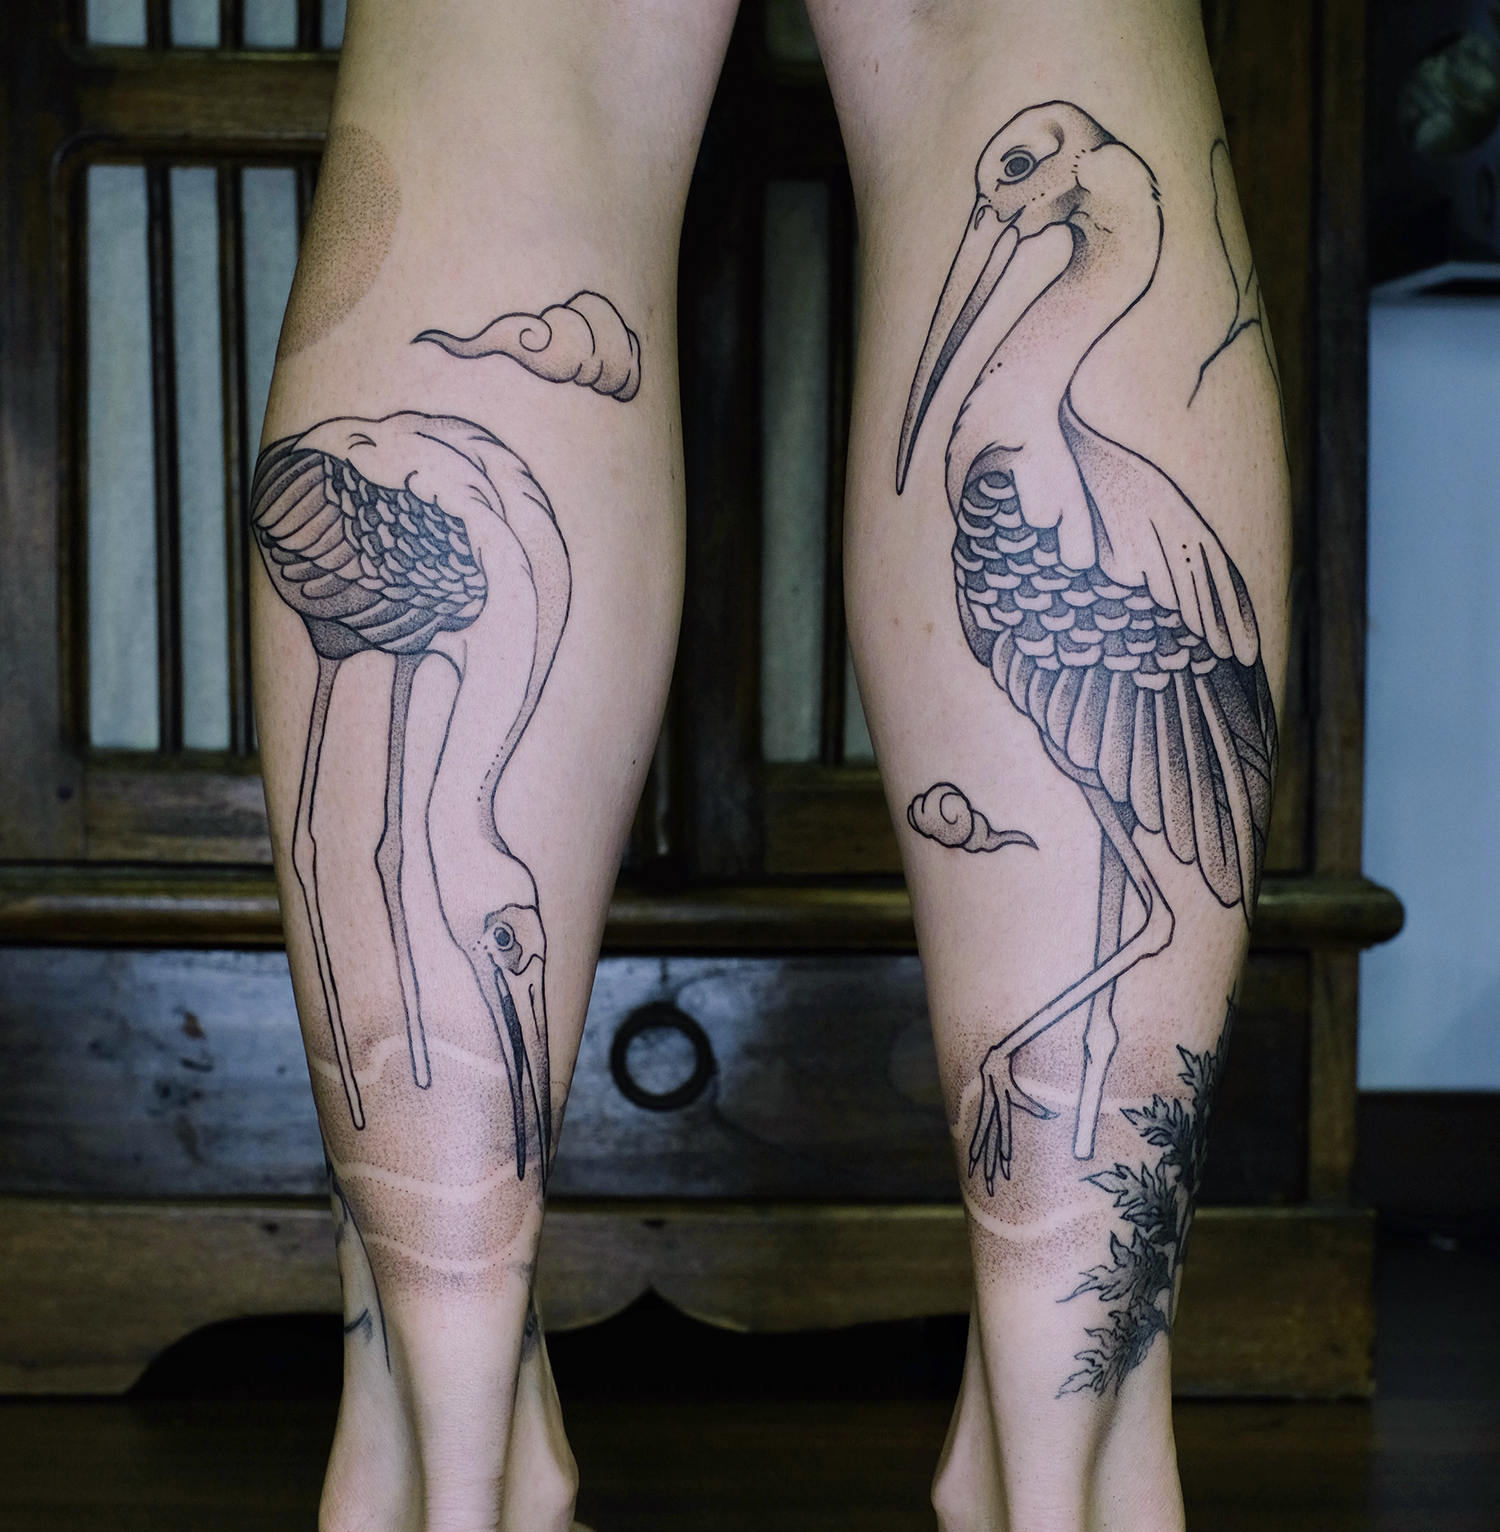 stork, illustrative tattoos on legs by yelselogy